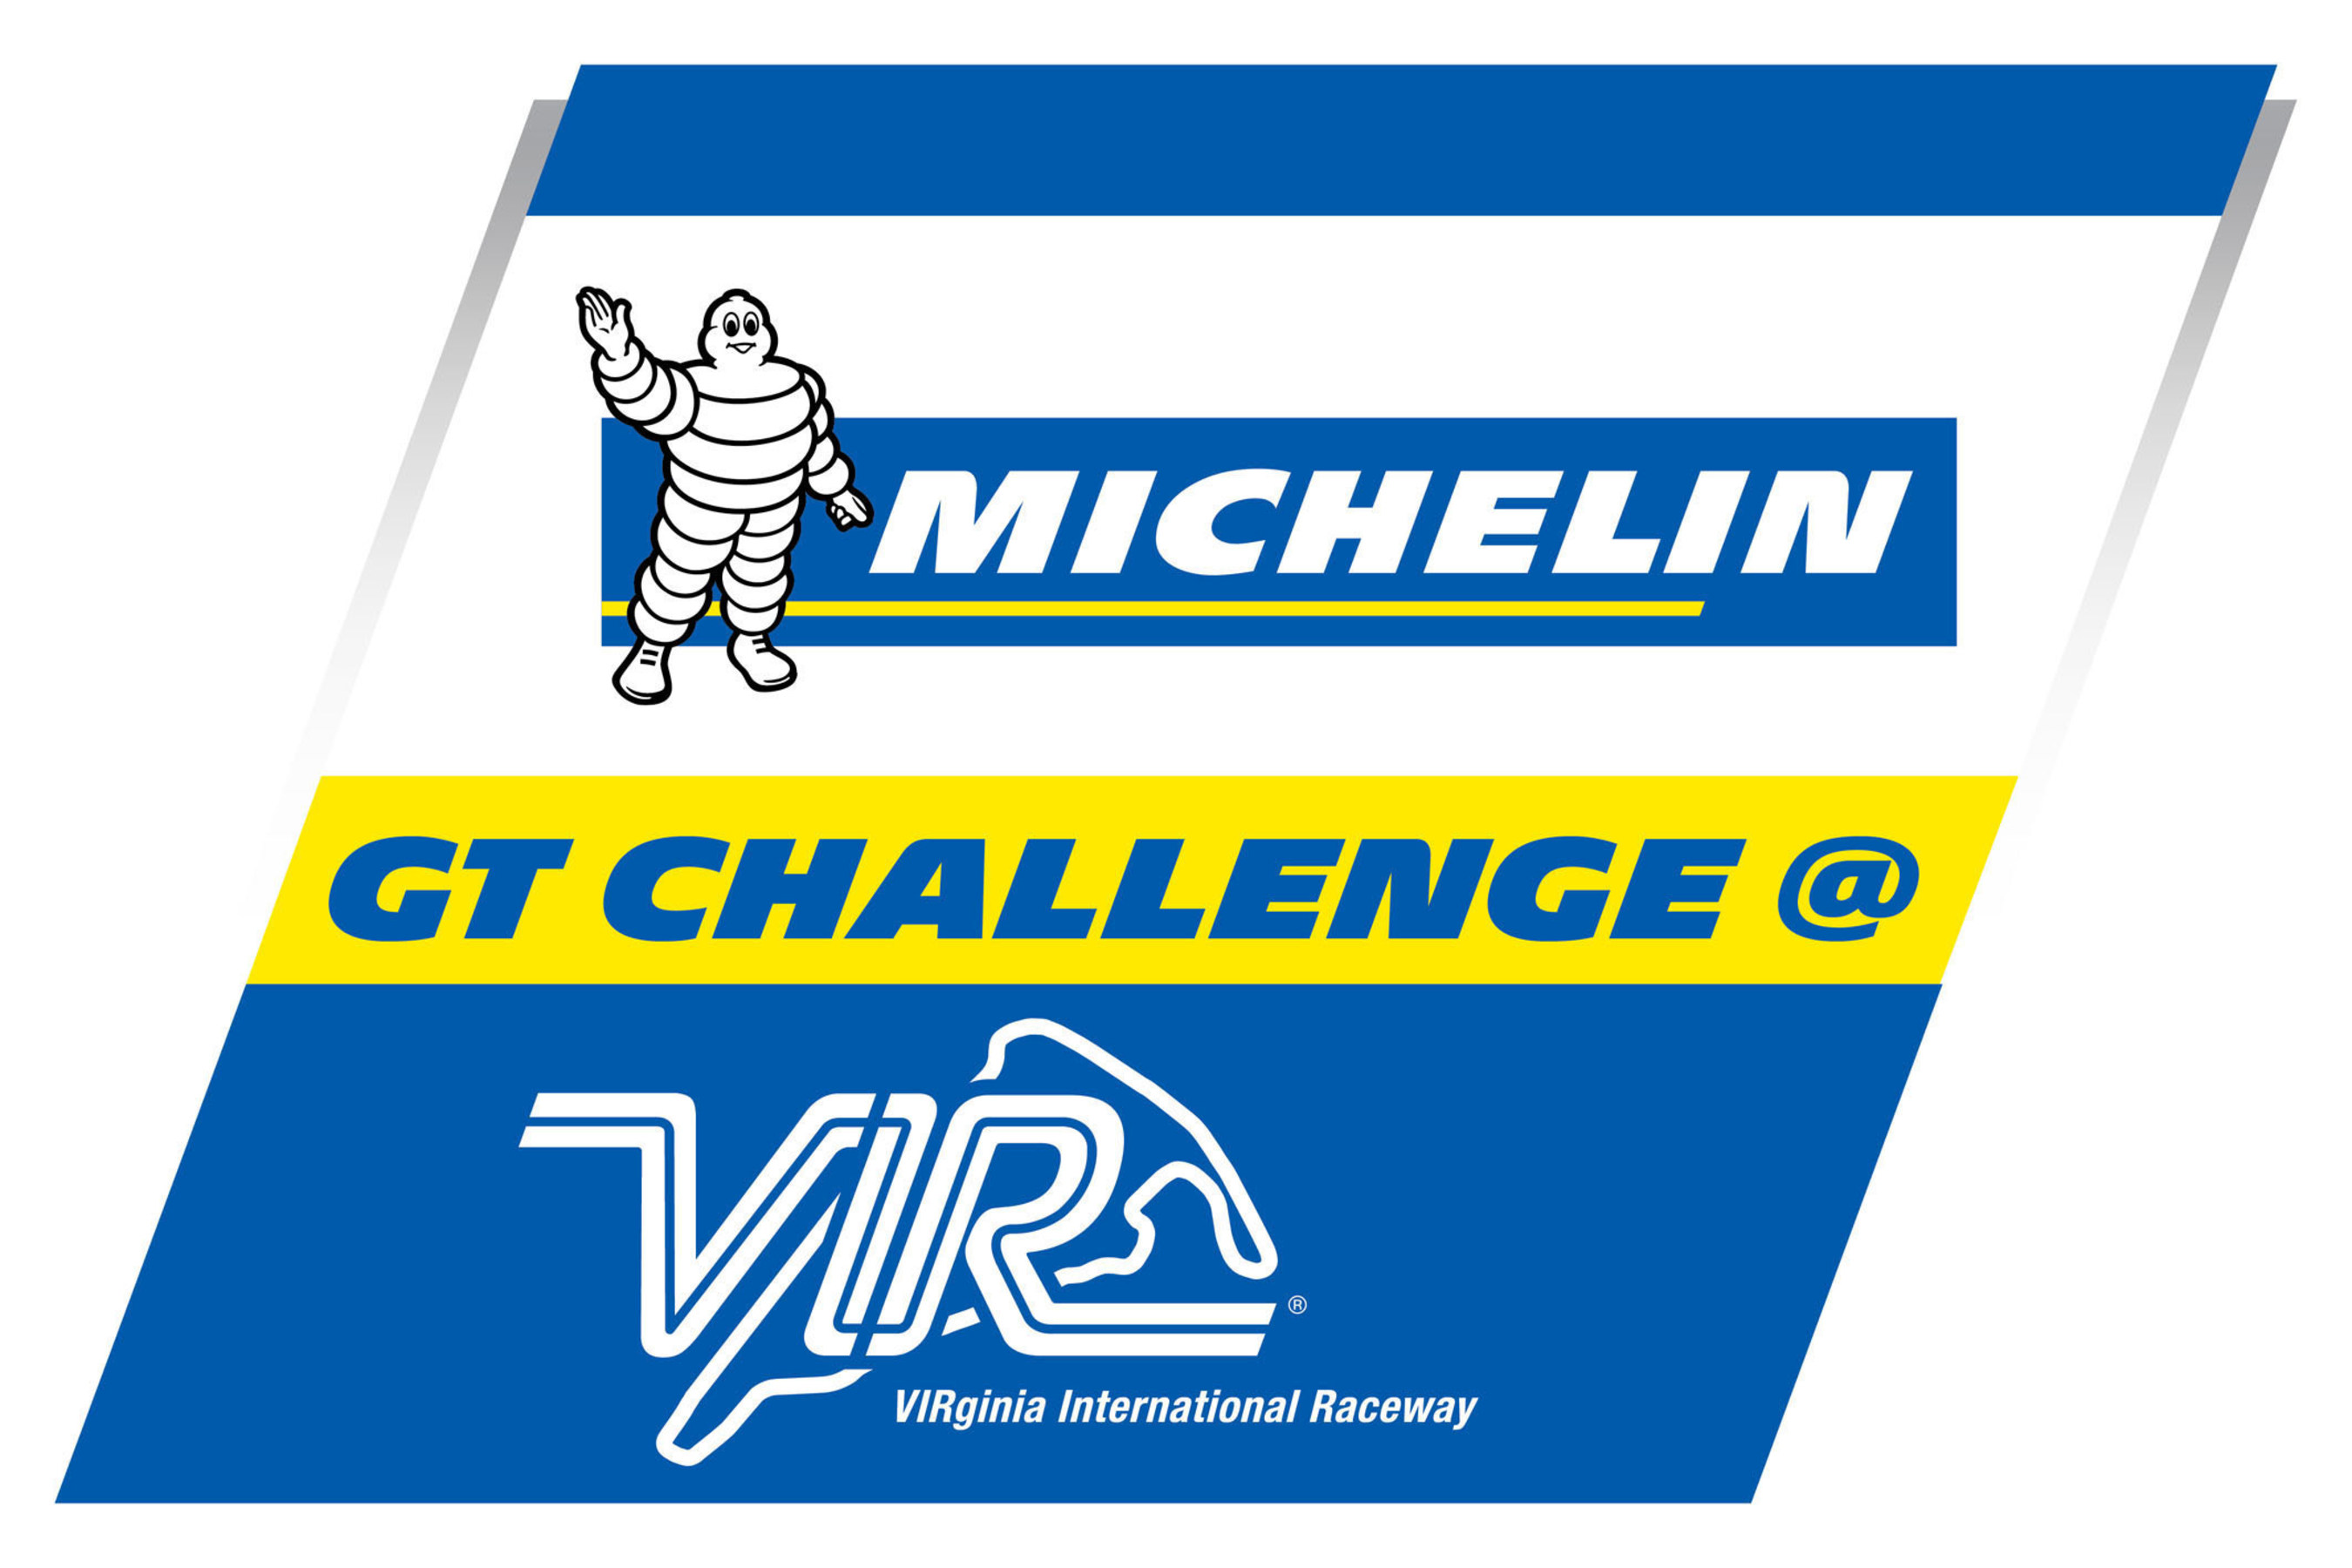 Michelin to Sponsor "Michelin GT Challenge" at VIRginia International Raceway